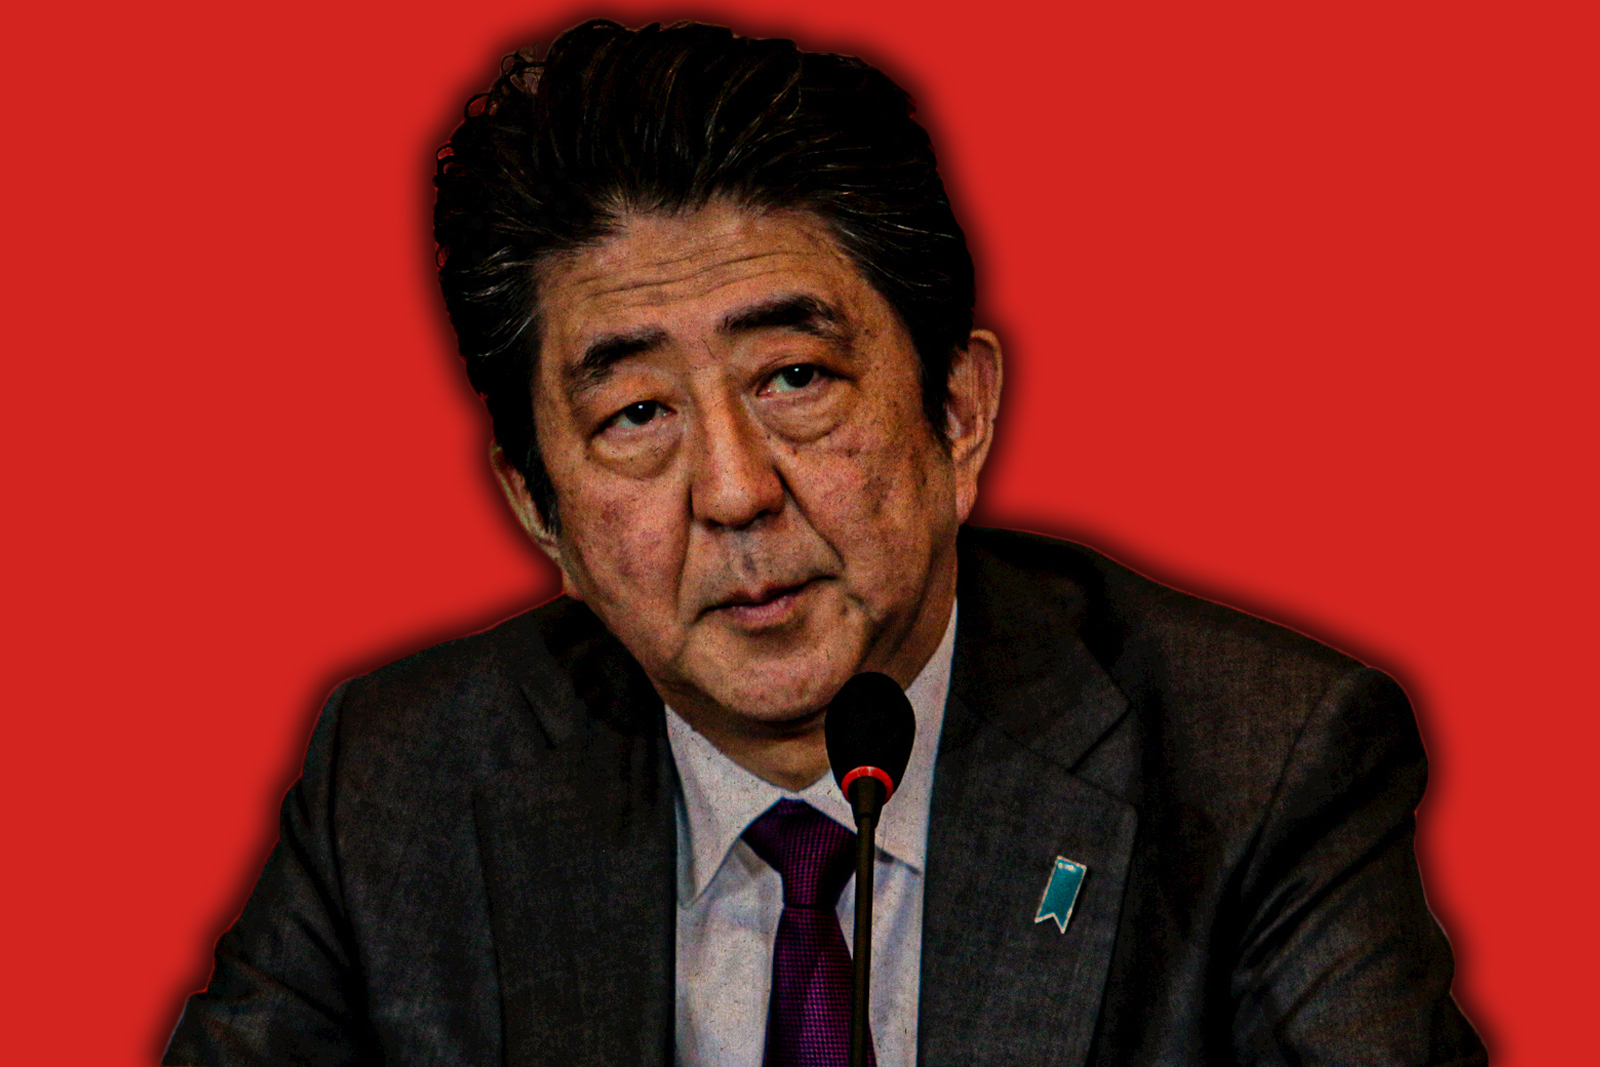 Former Prime Minister Shinzo Abe